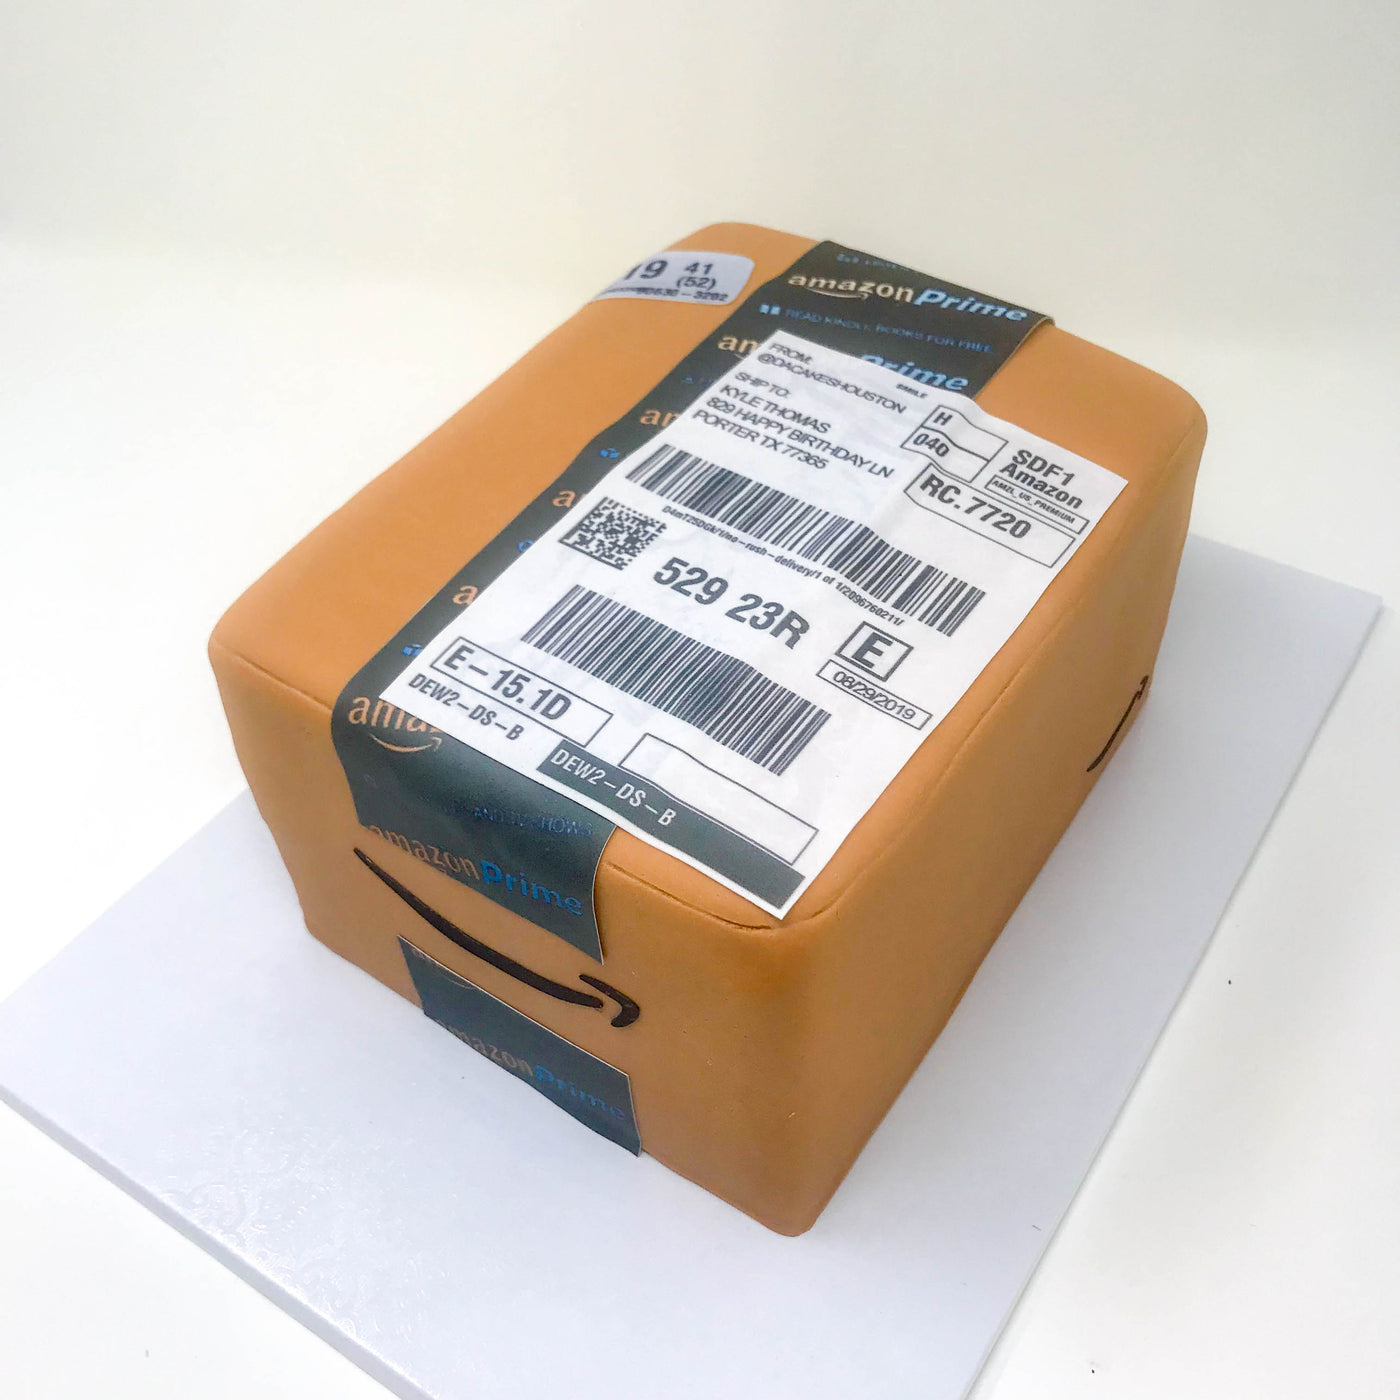 Amazon package cake